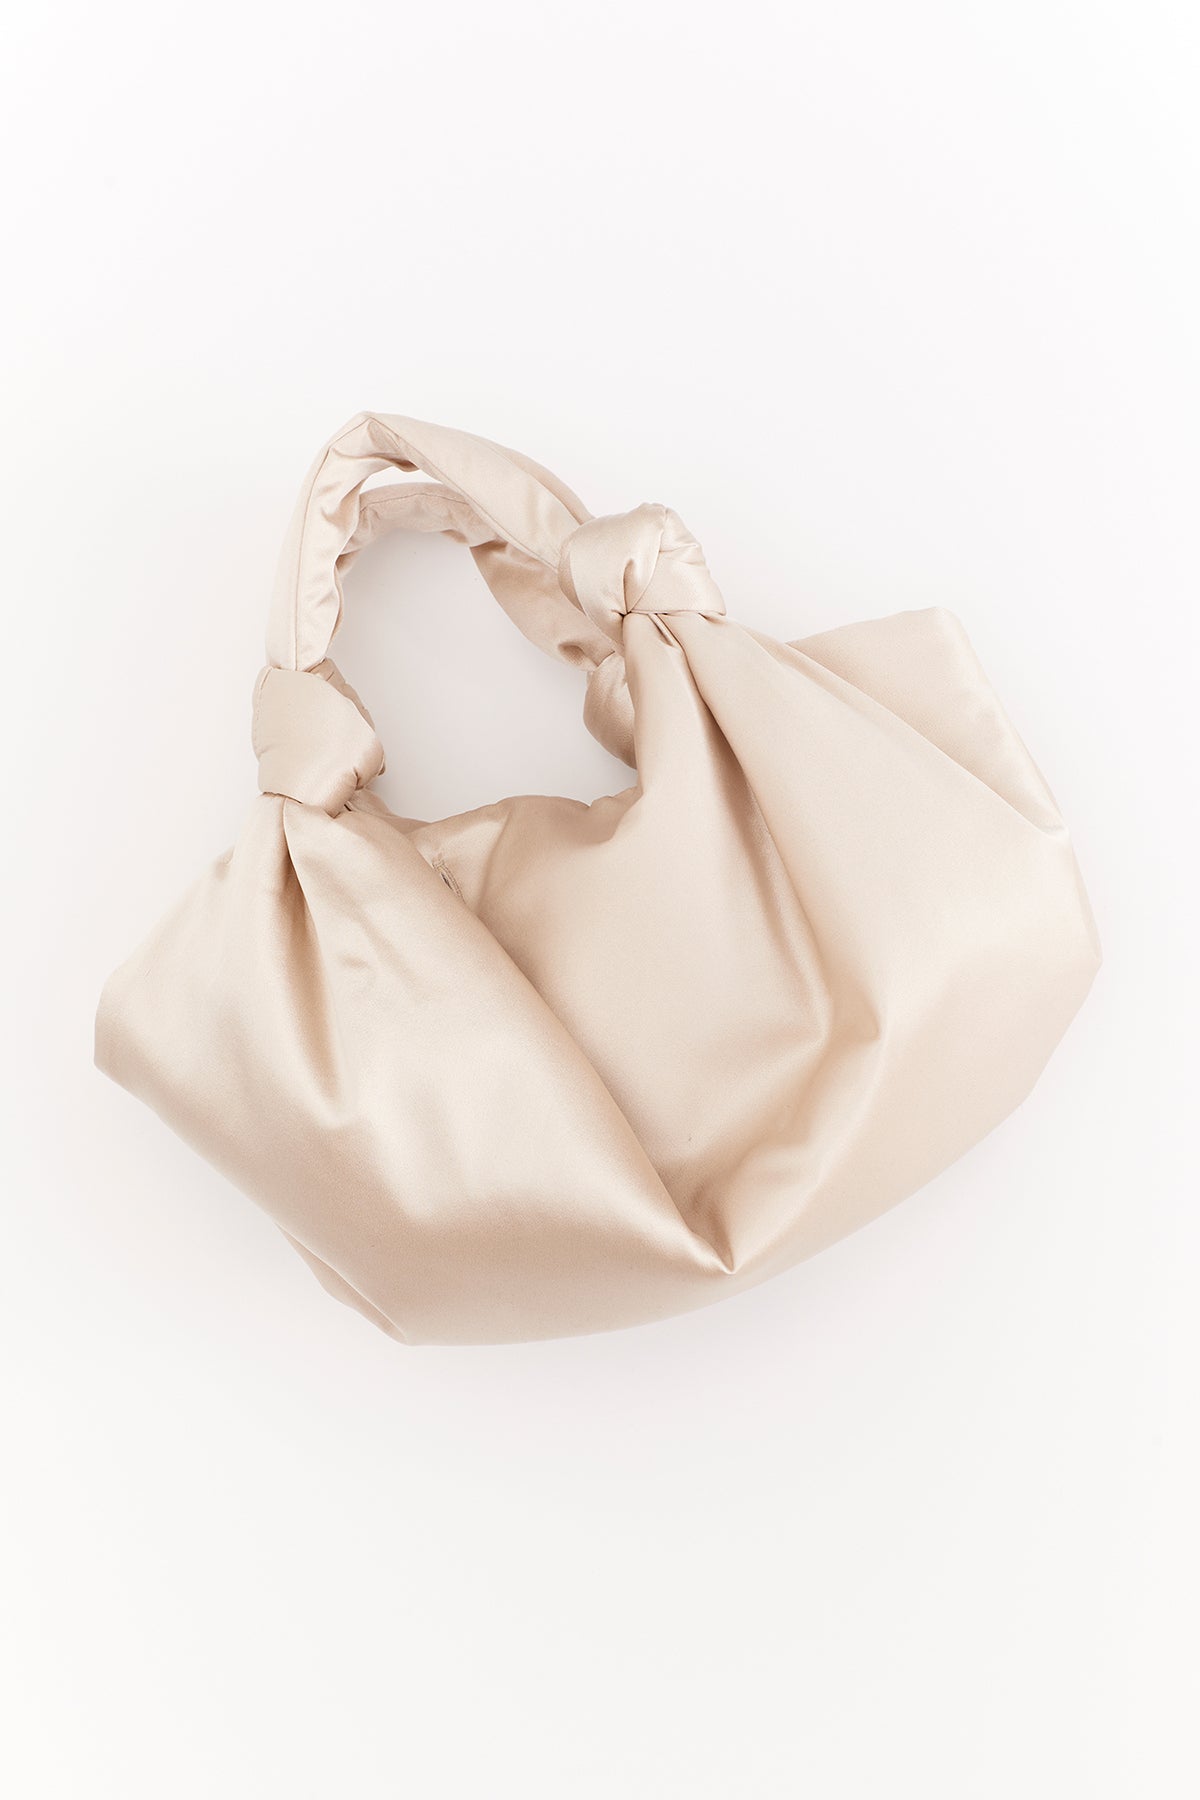   A Velvet by Jenny Graham ROBYN BAG on a white surface. 